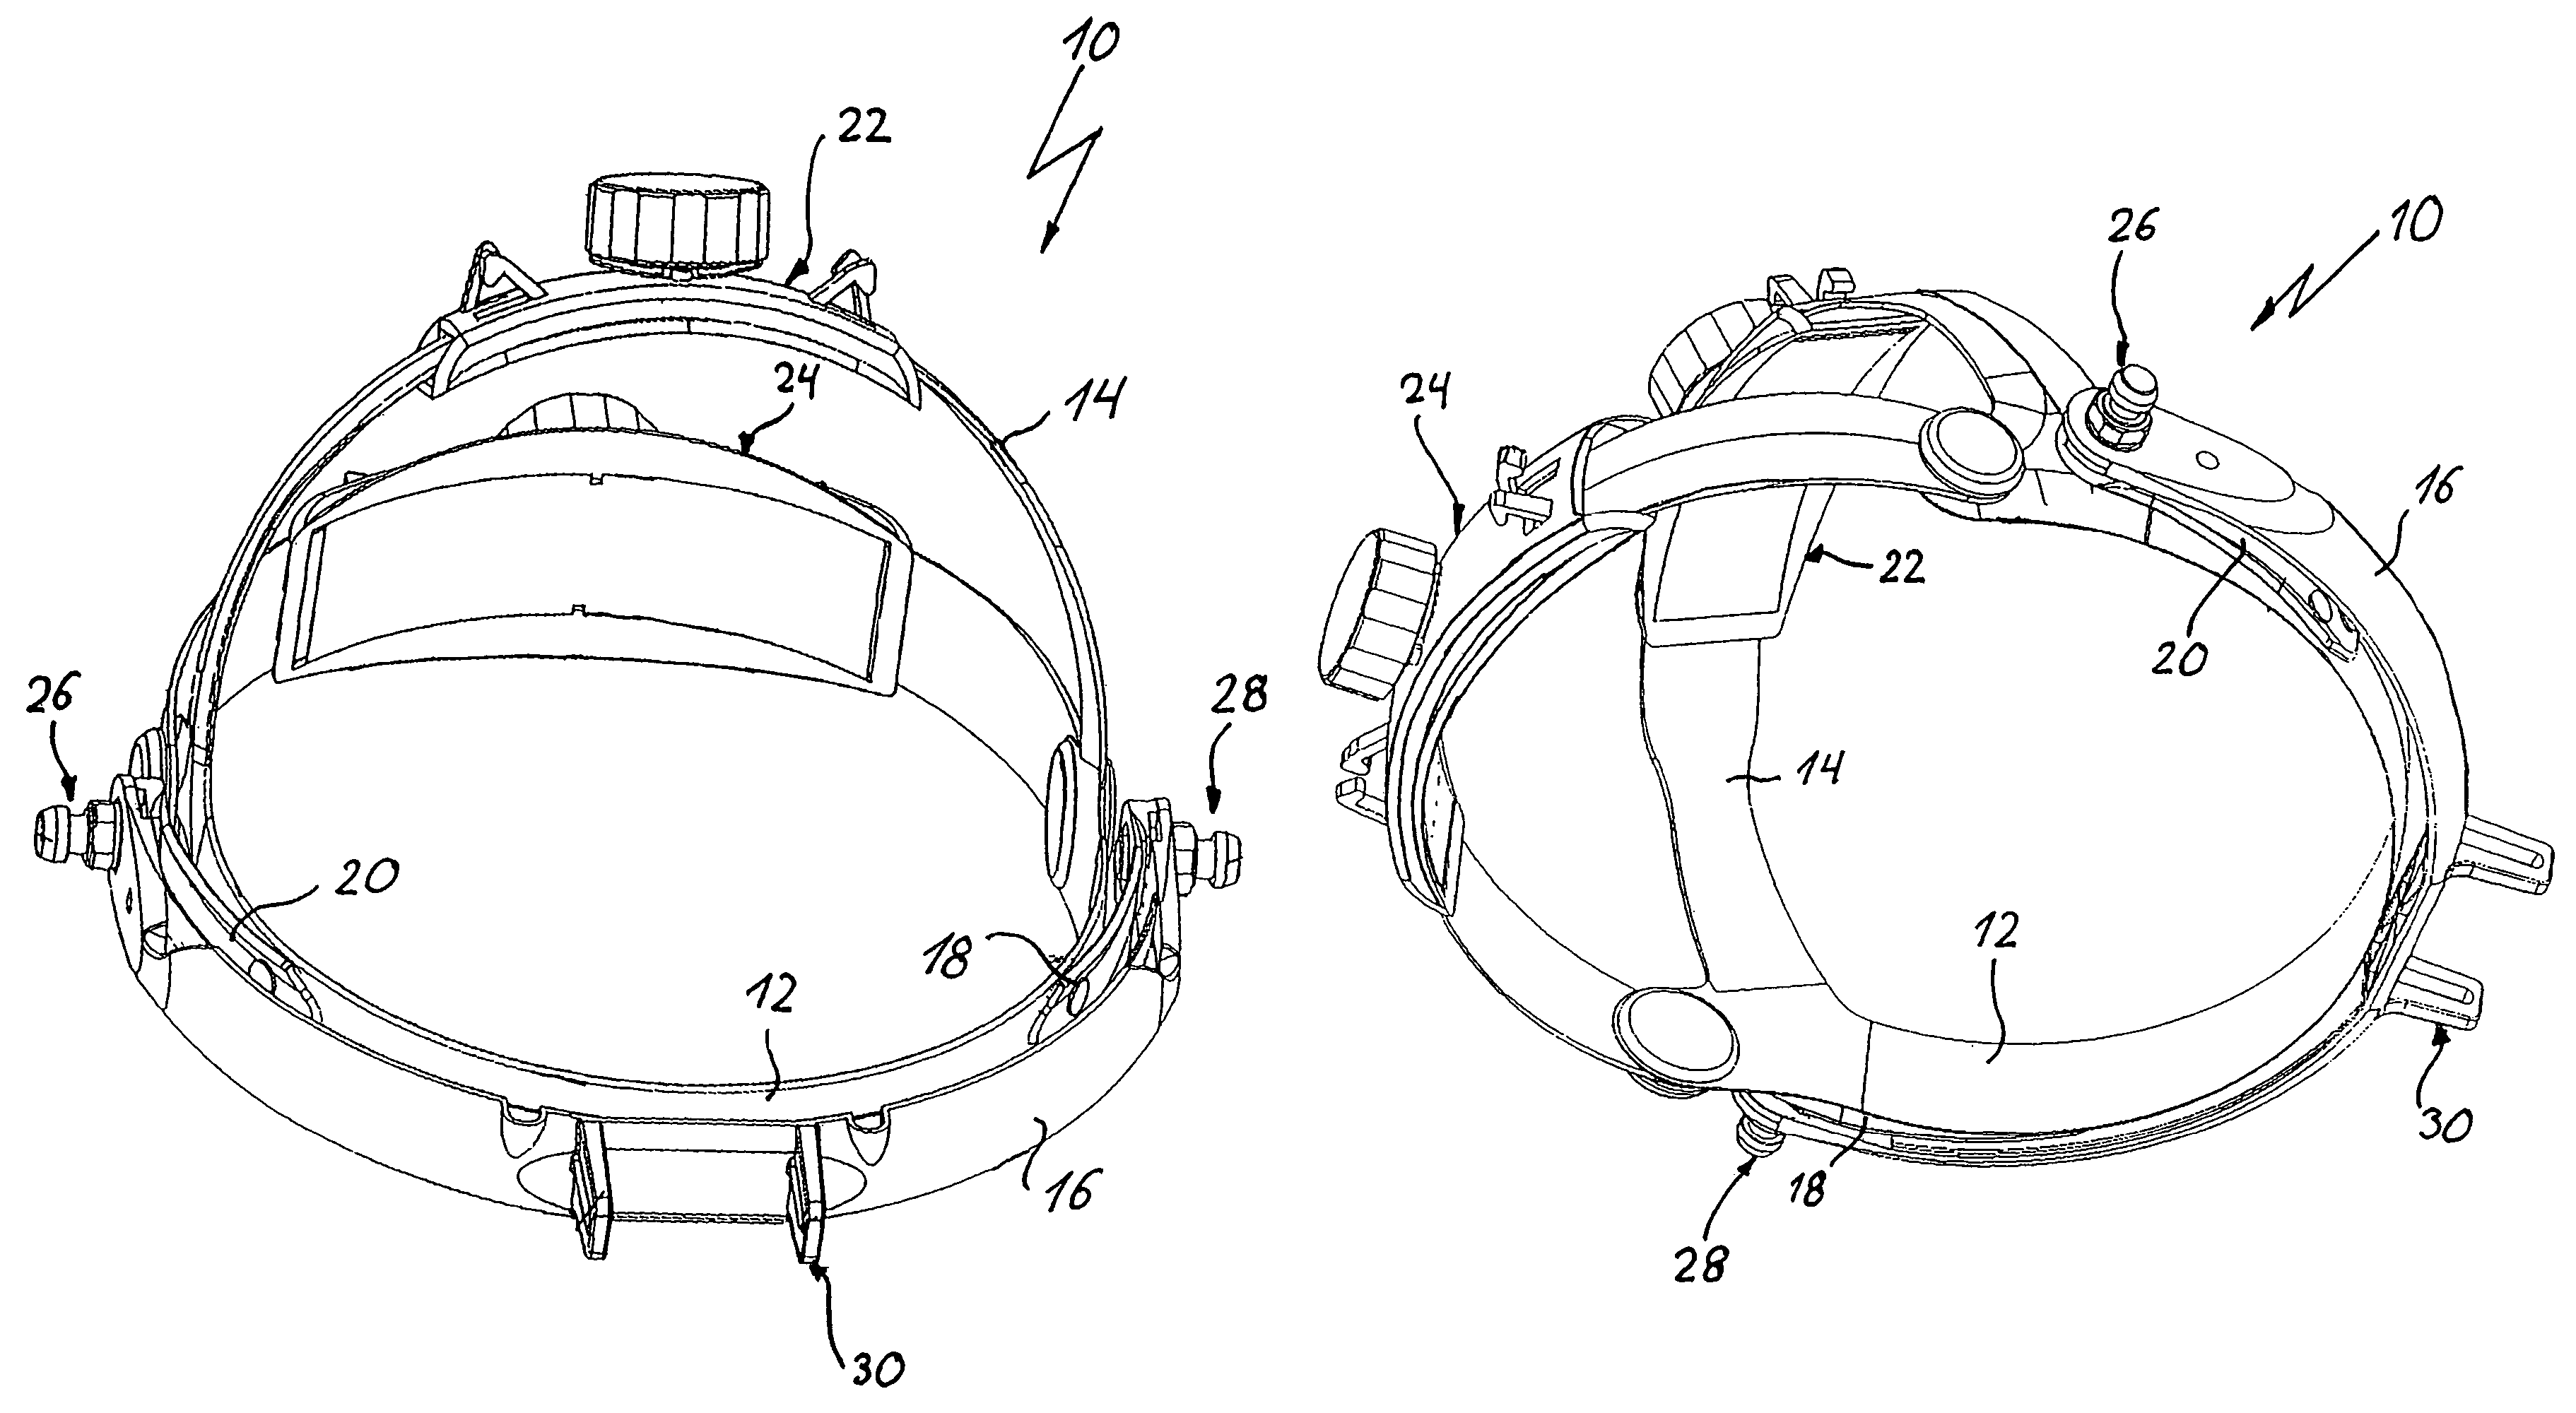 Headband apparatus for head-worn optical instruments